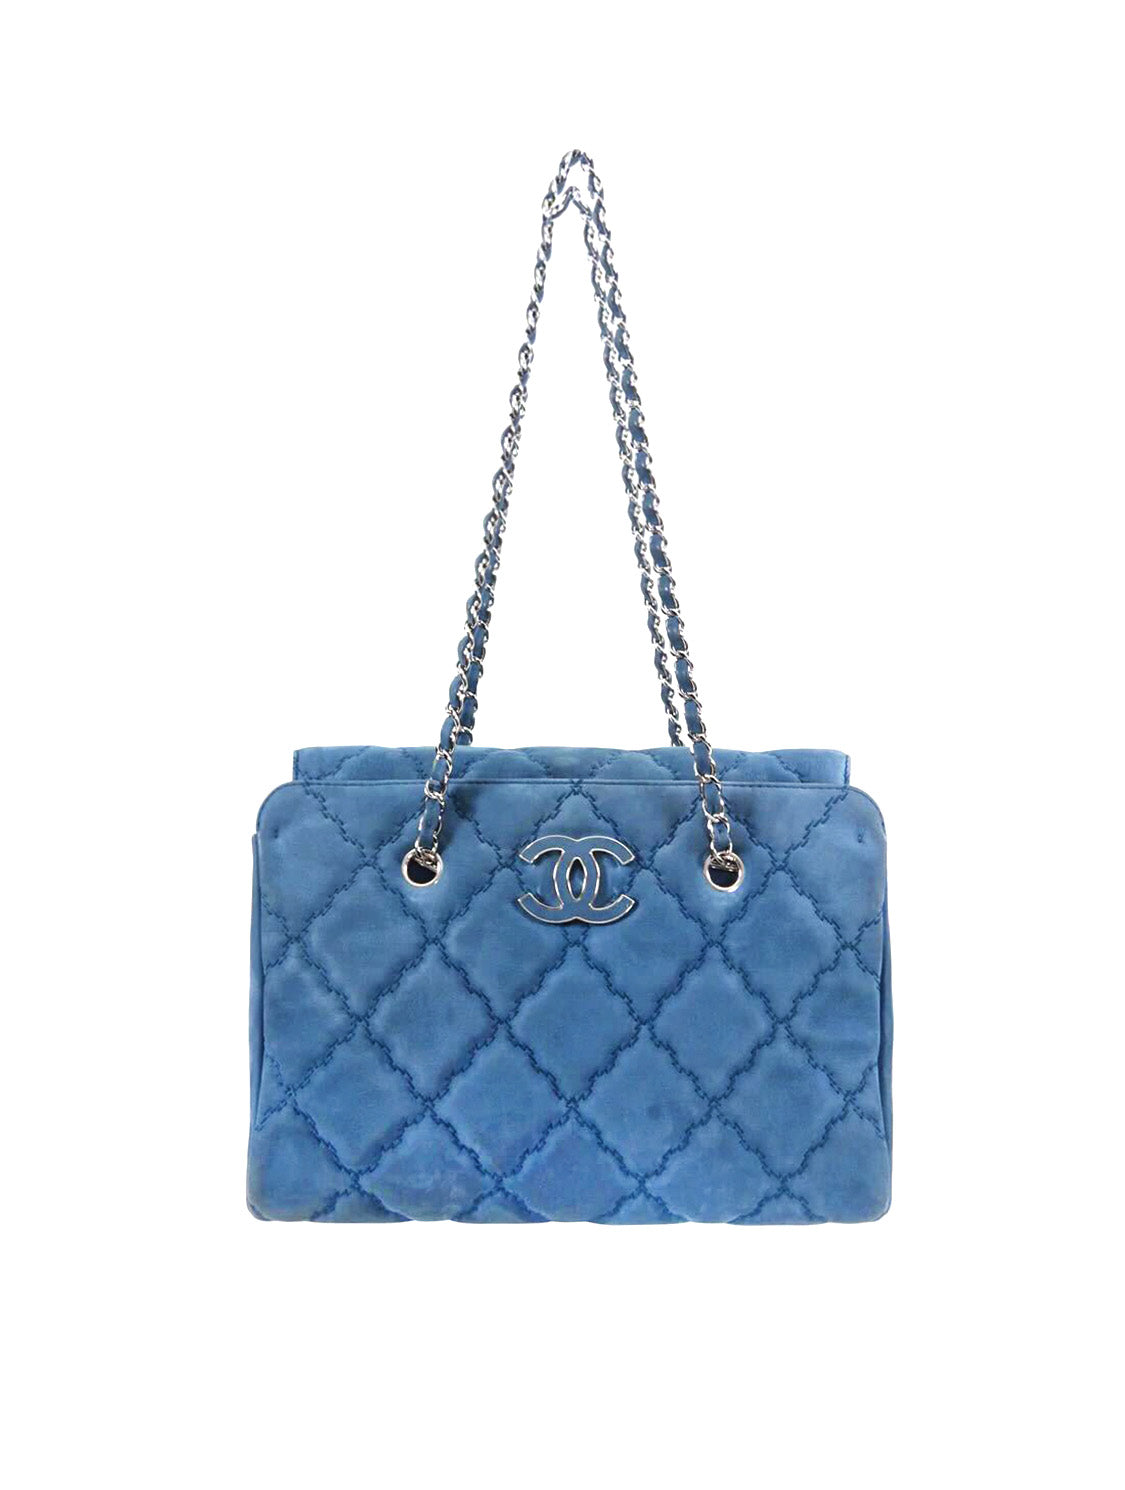 Chanel Blue Quilted Lambskin Rectangular Mini Classic Shoulder/Crossbody Bag